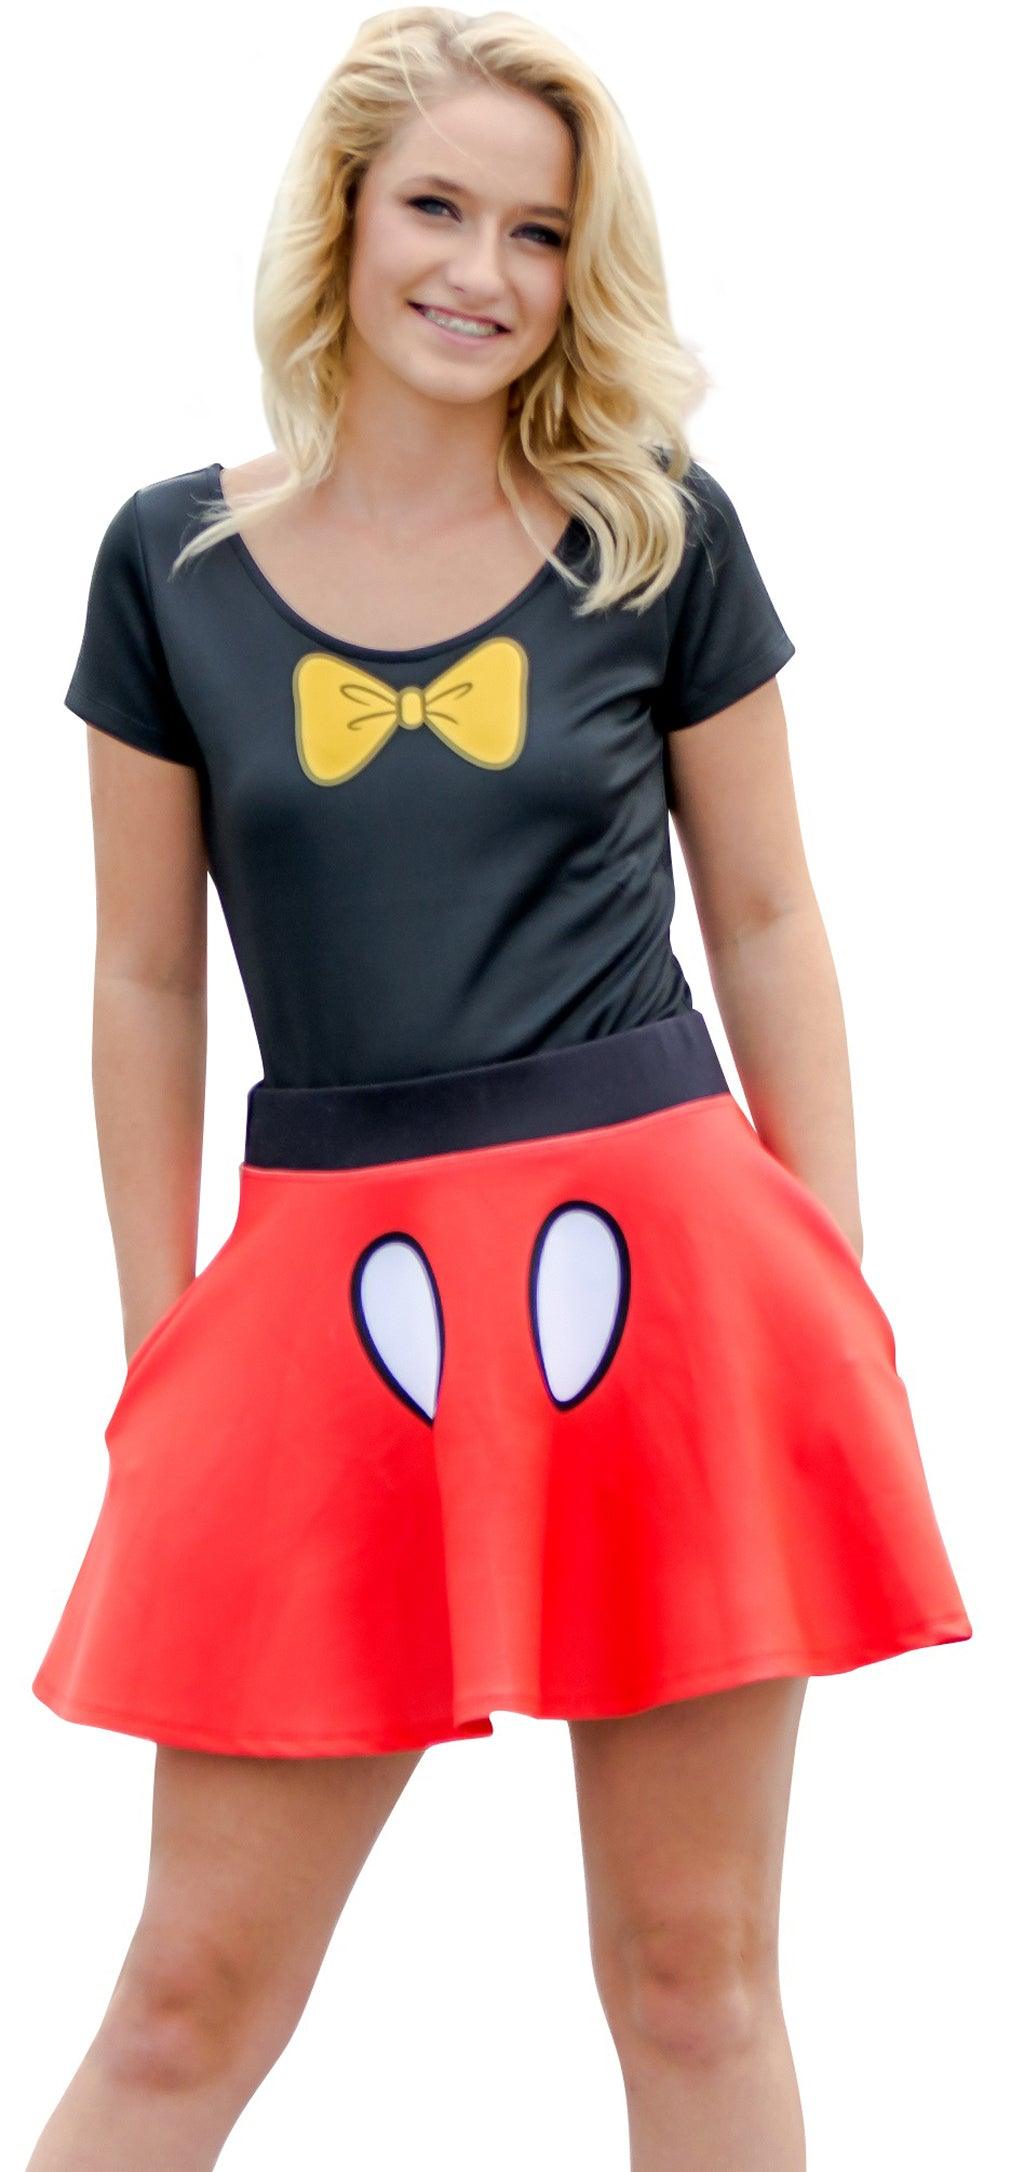 Minnie Mouse Bodysuit and Skirt Costume Set - TVStoreOnline